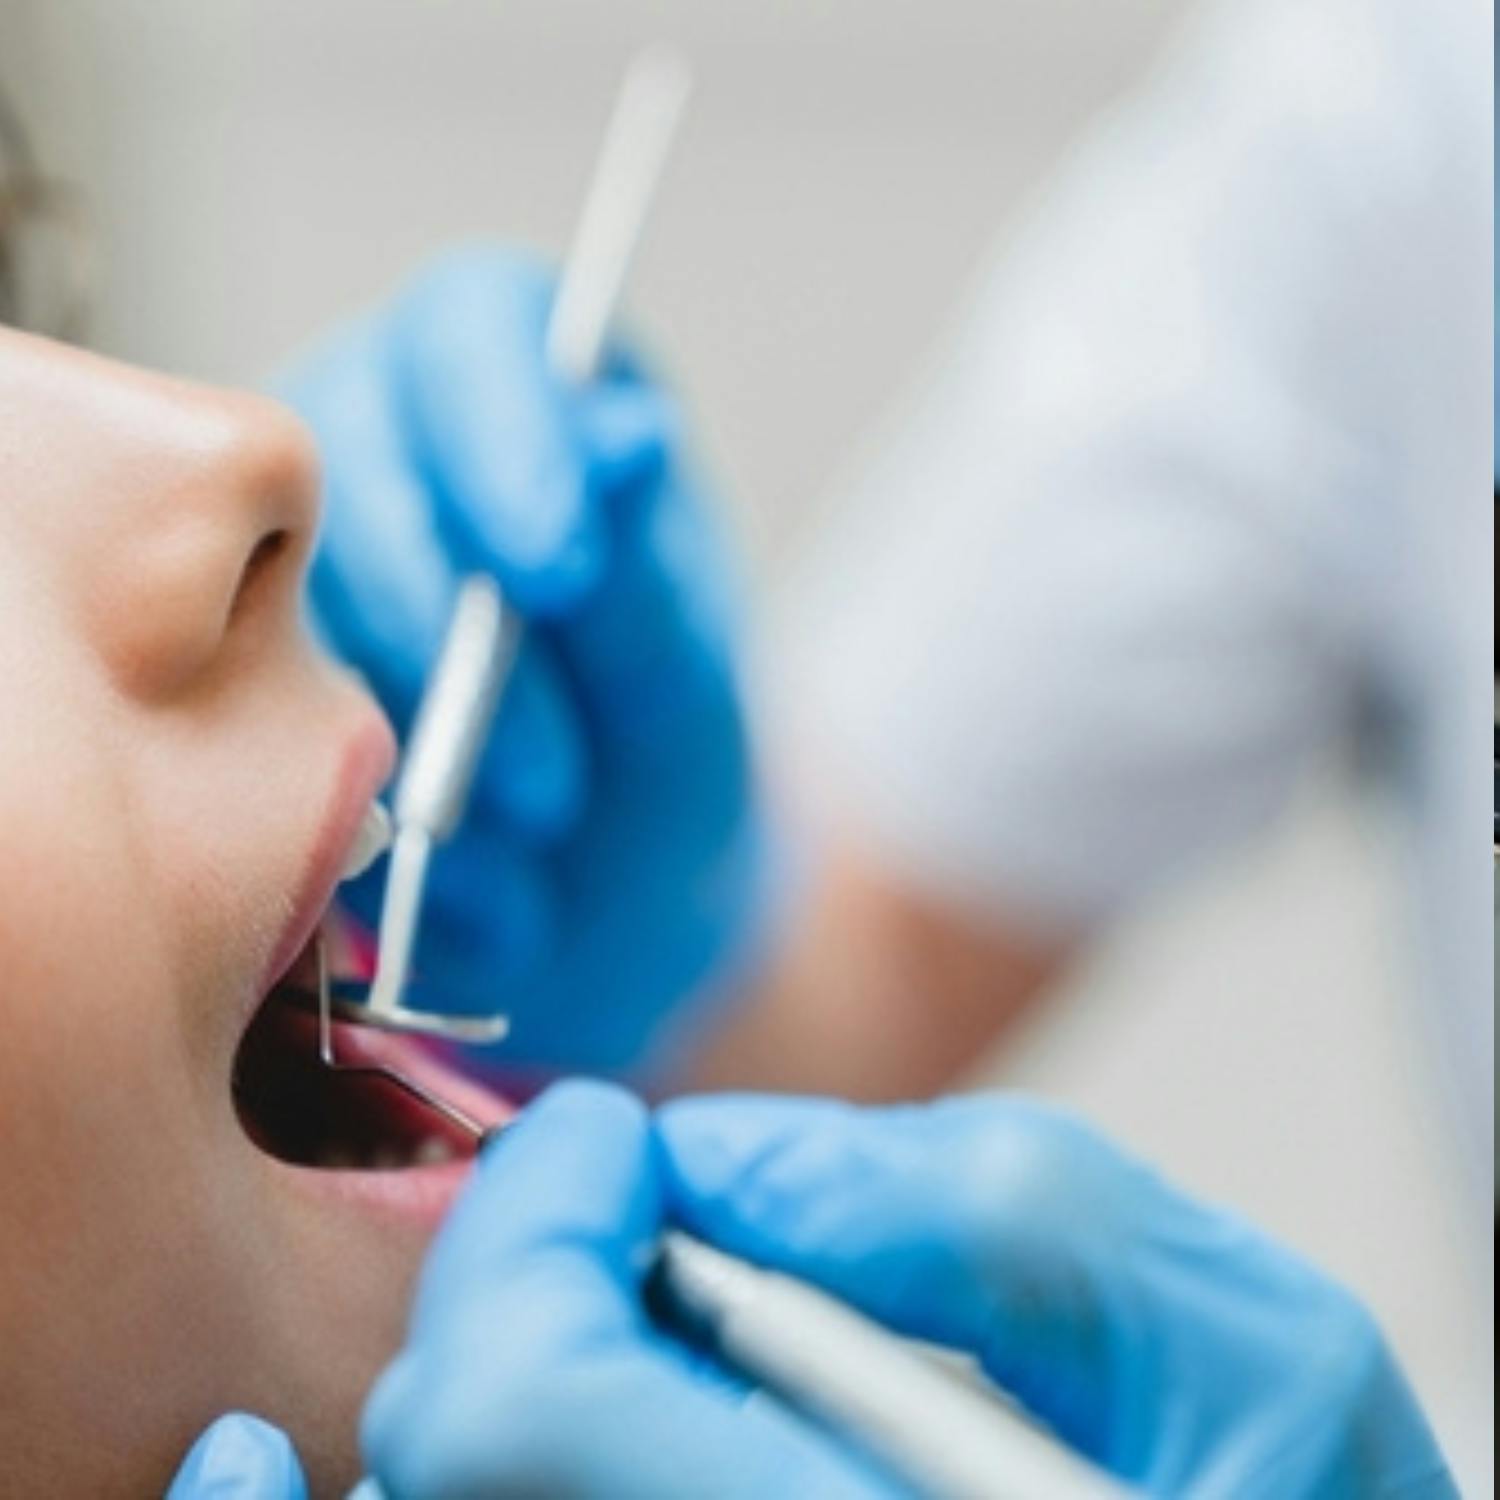 100,000 children were denied a school dental screening appointment in 2023